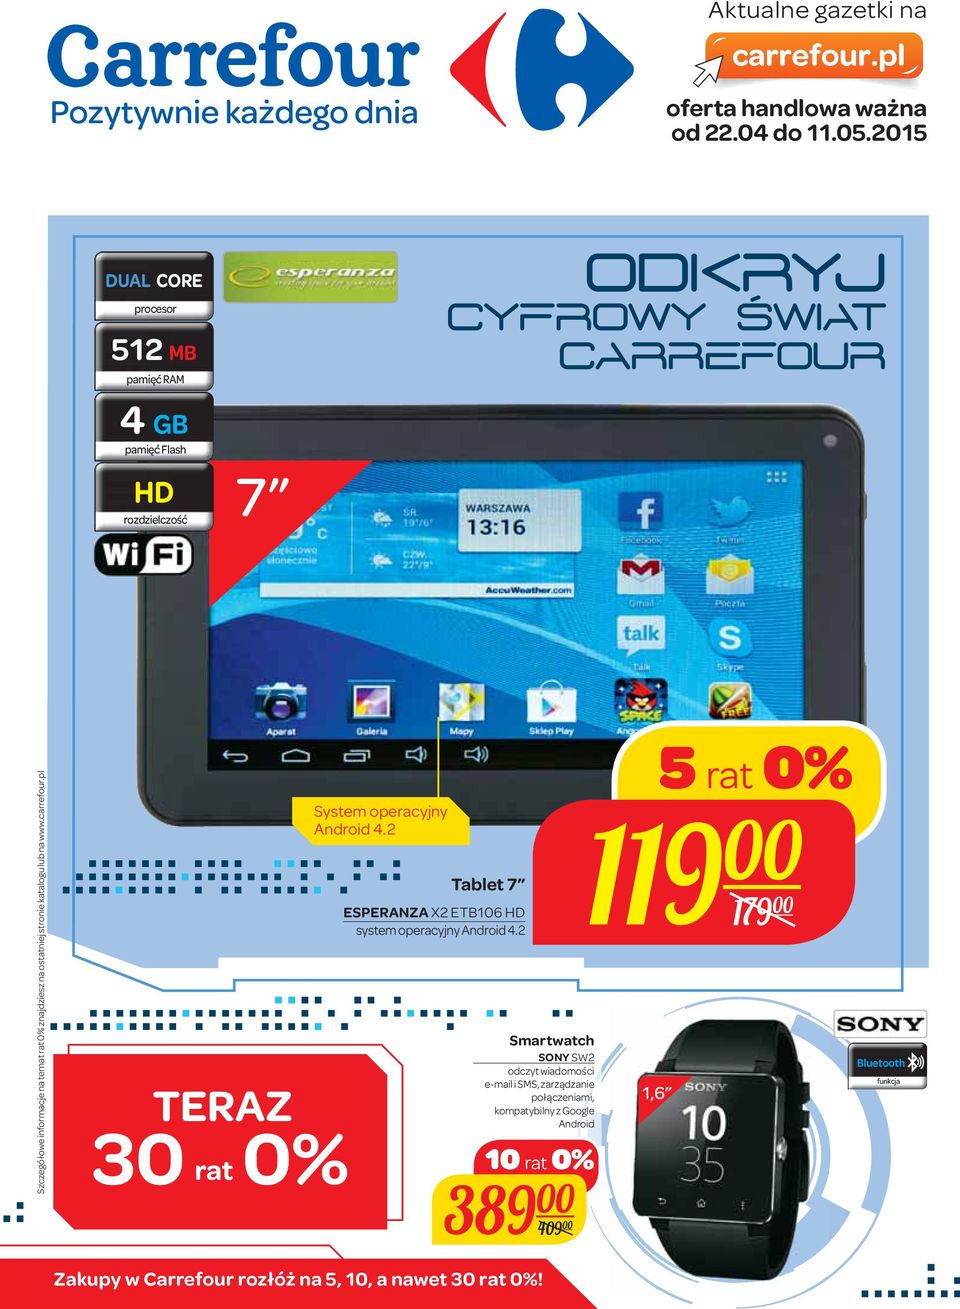 2 Tablet 7 ESPERANZA X2 ETB106 HD system operacyjny Android 4.